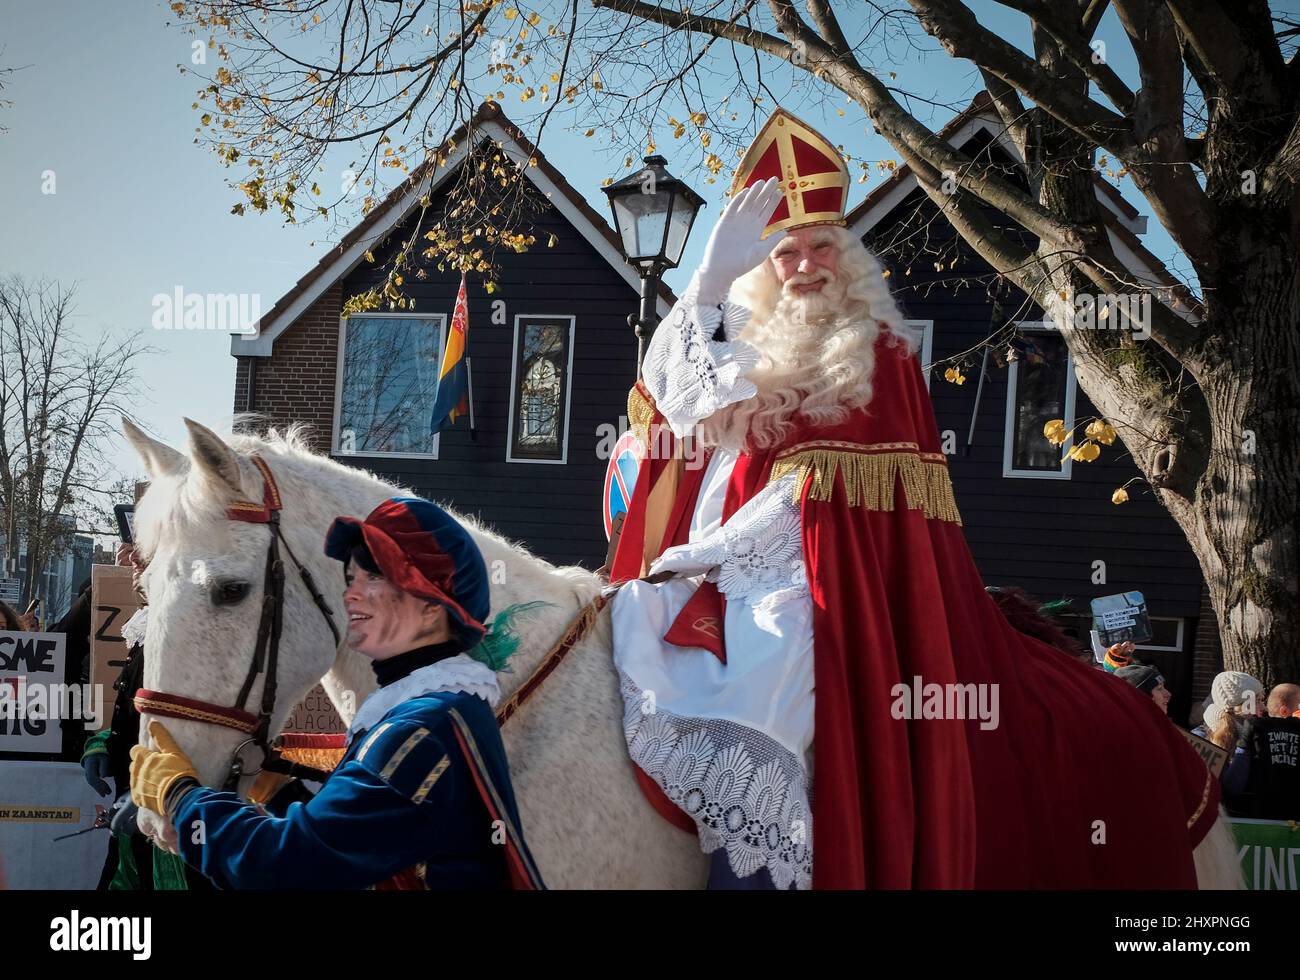 St. Nicholas, riding his horse Amerigo, roams the streets of Zaandam greeting all attendees to the event Stock Photo